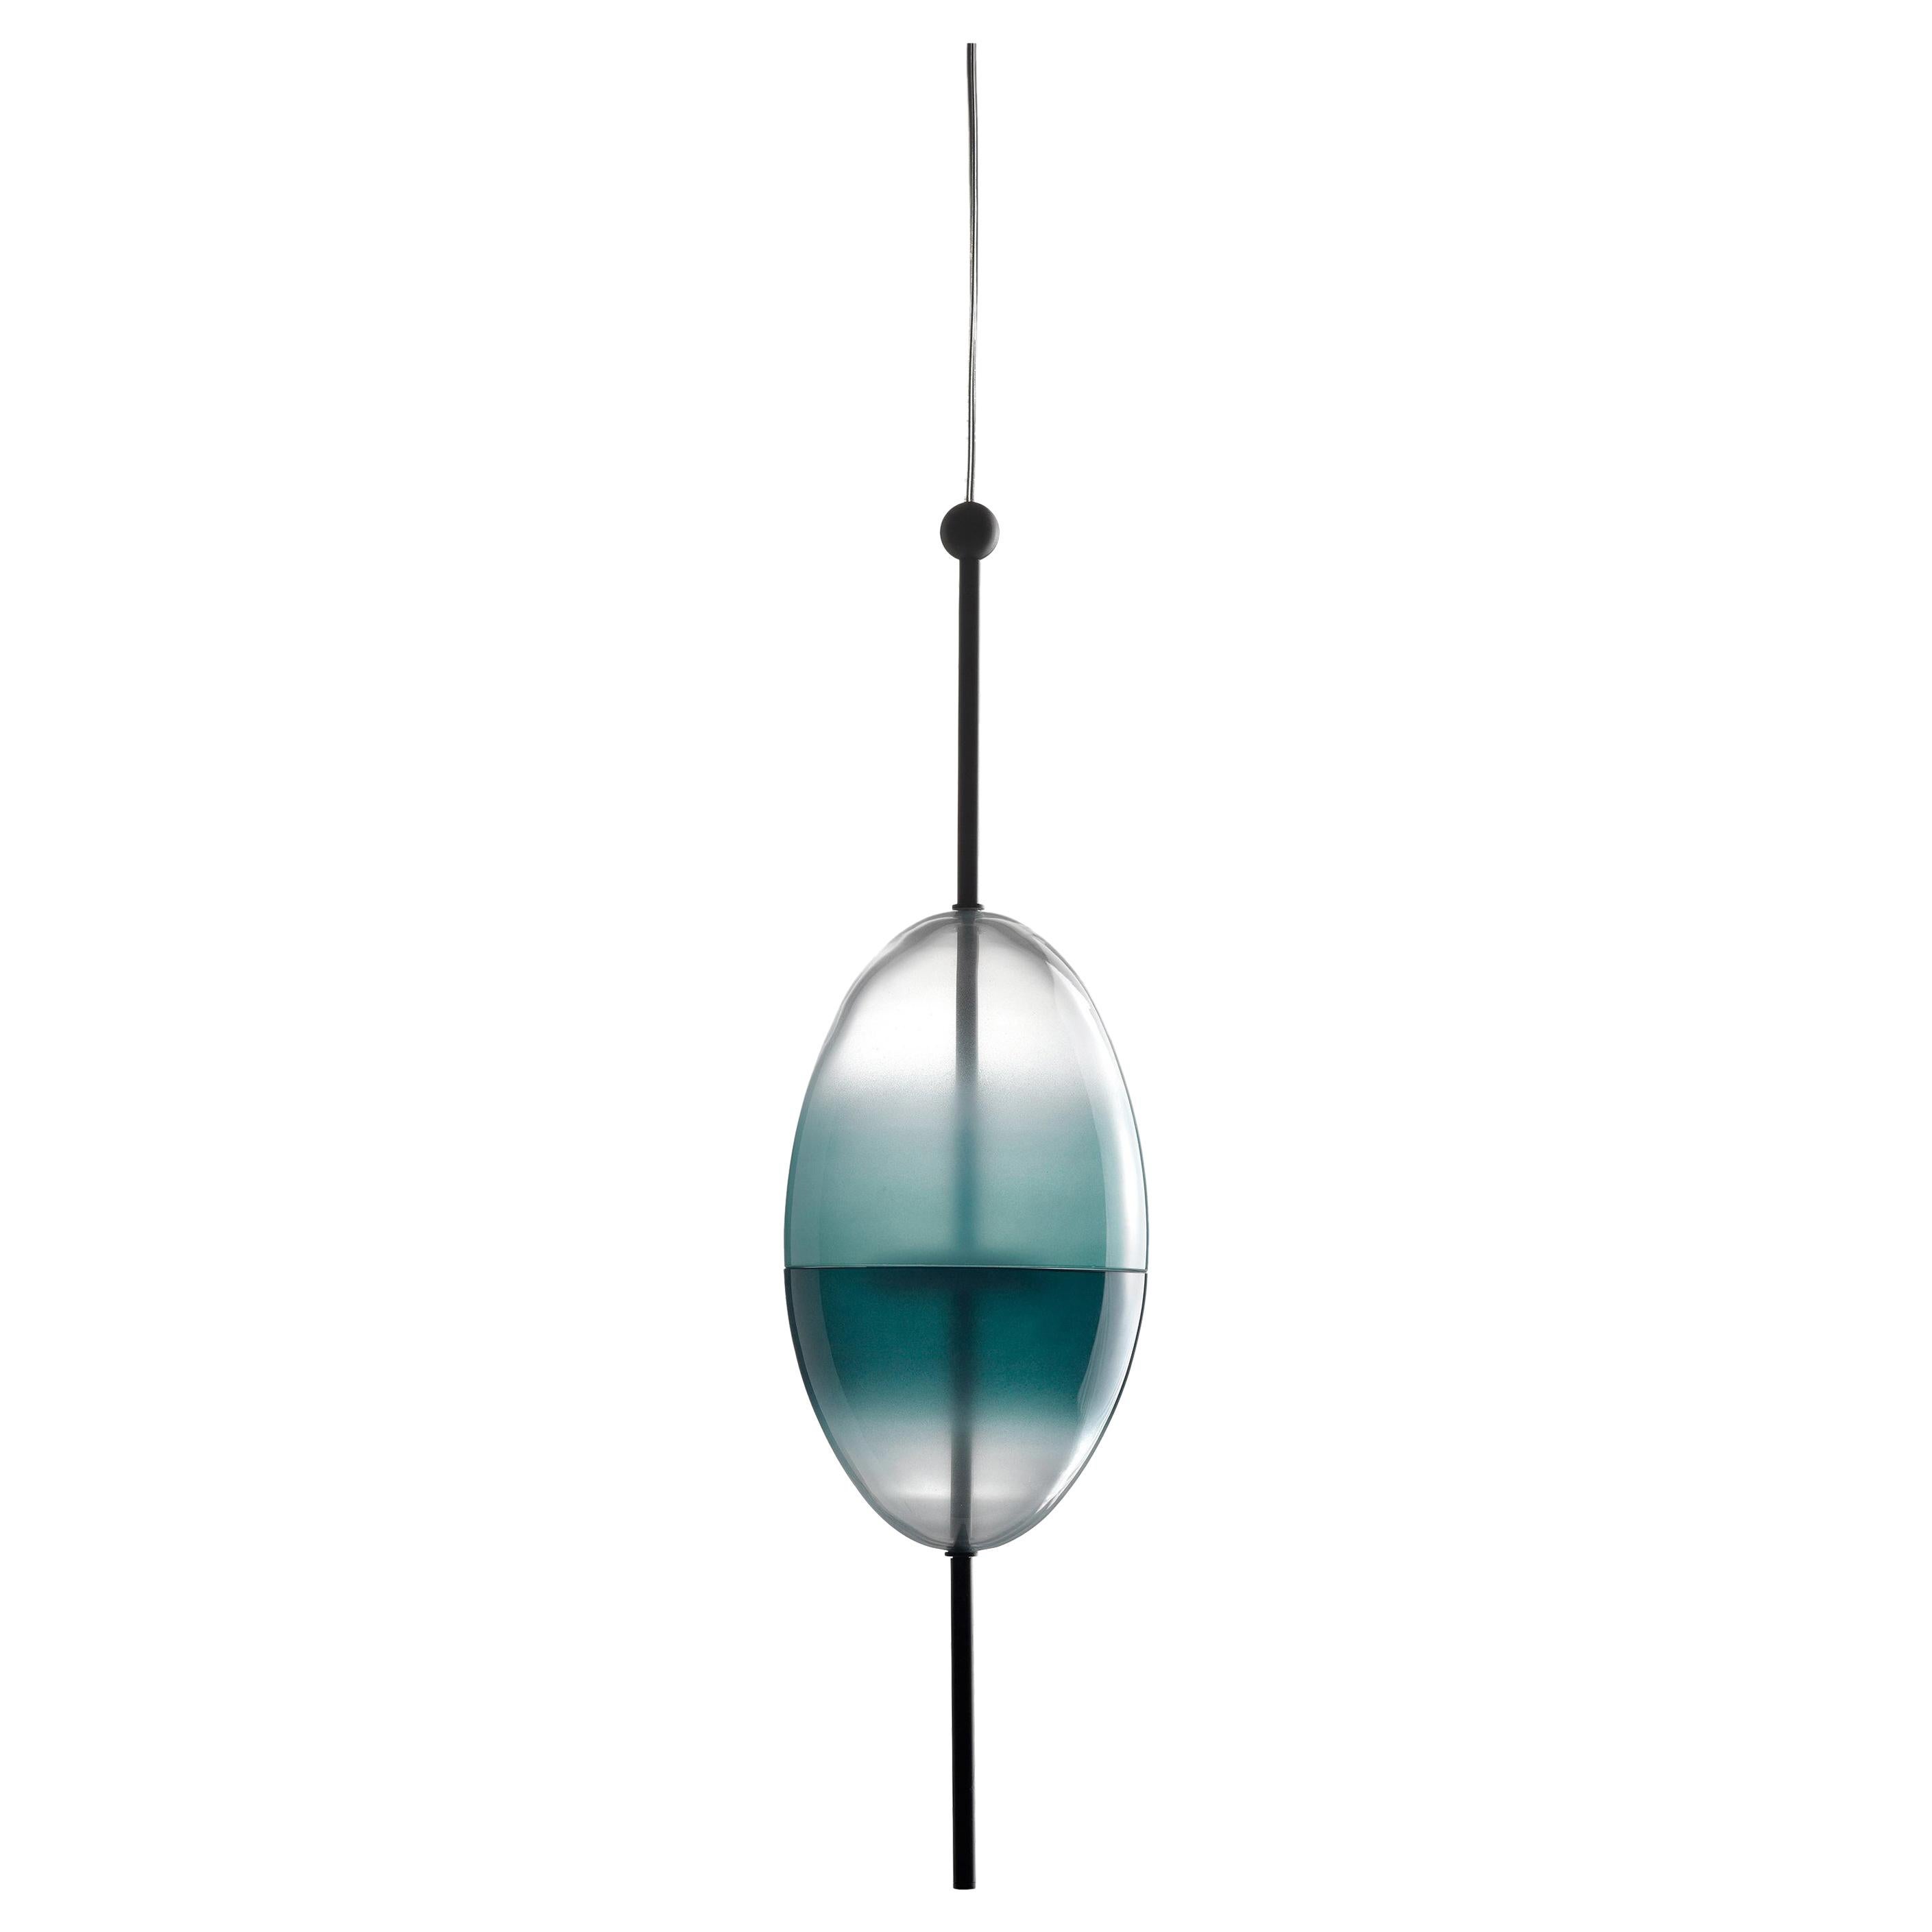 Flow[T] S1 by Nao Tamura - Lampe pendante en verre soufflé de Murano